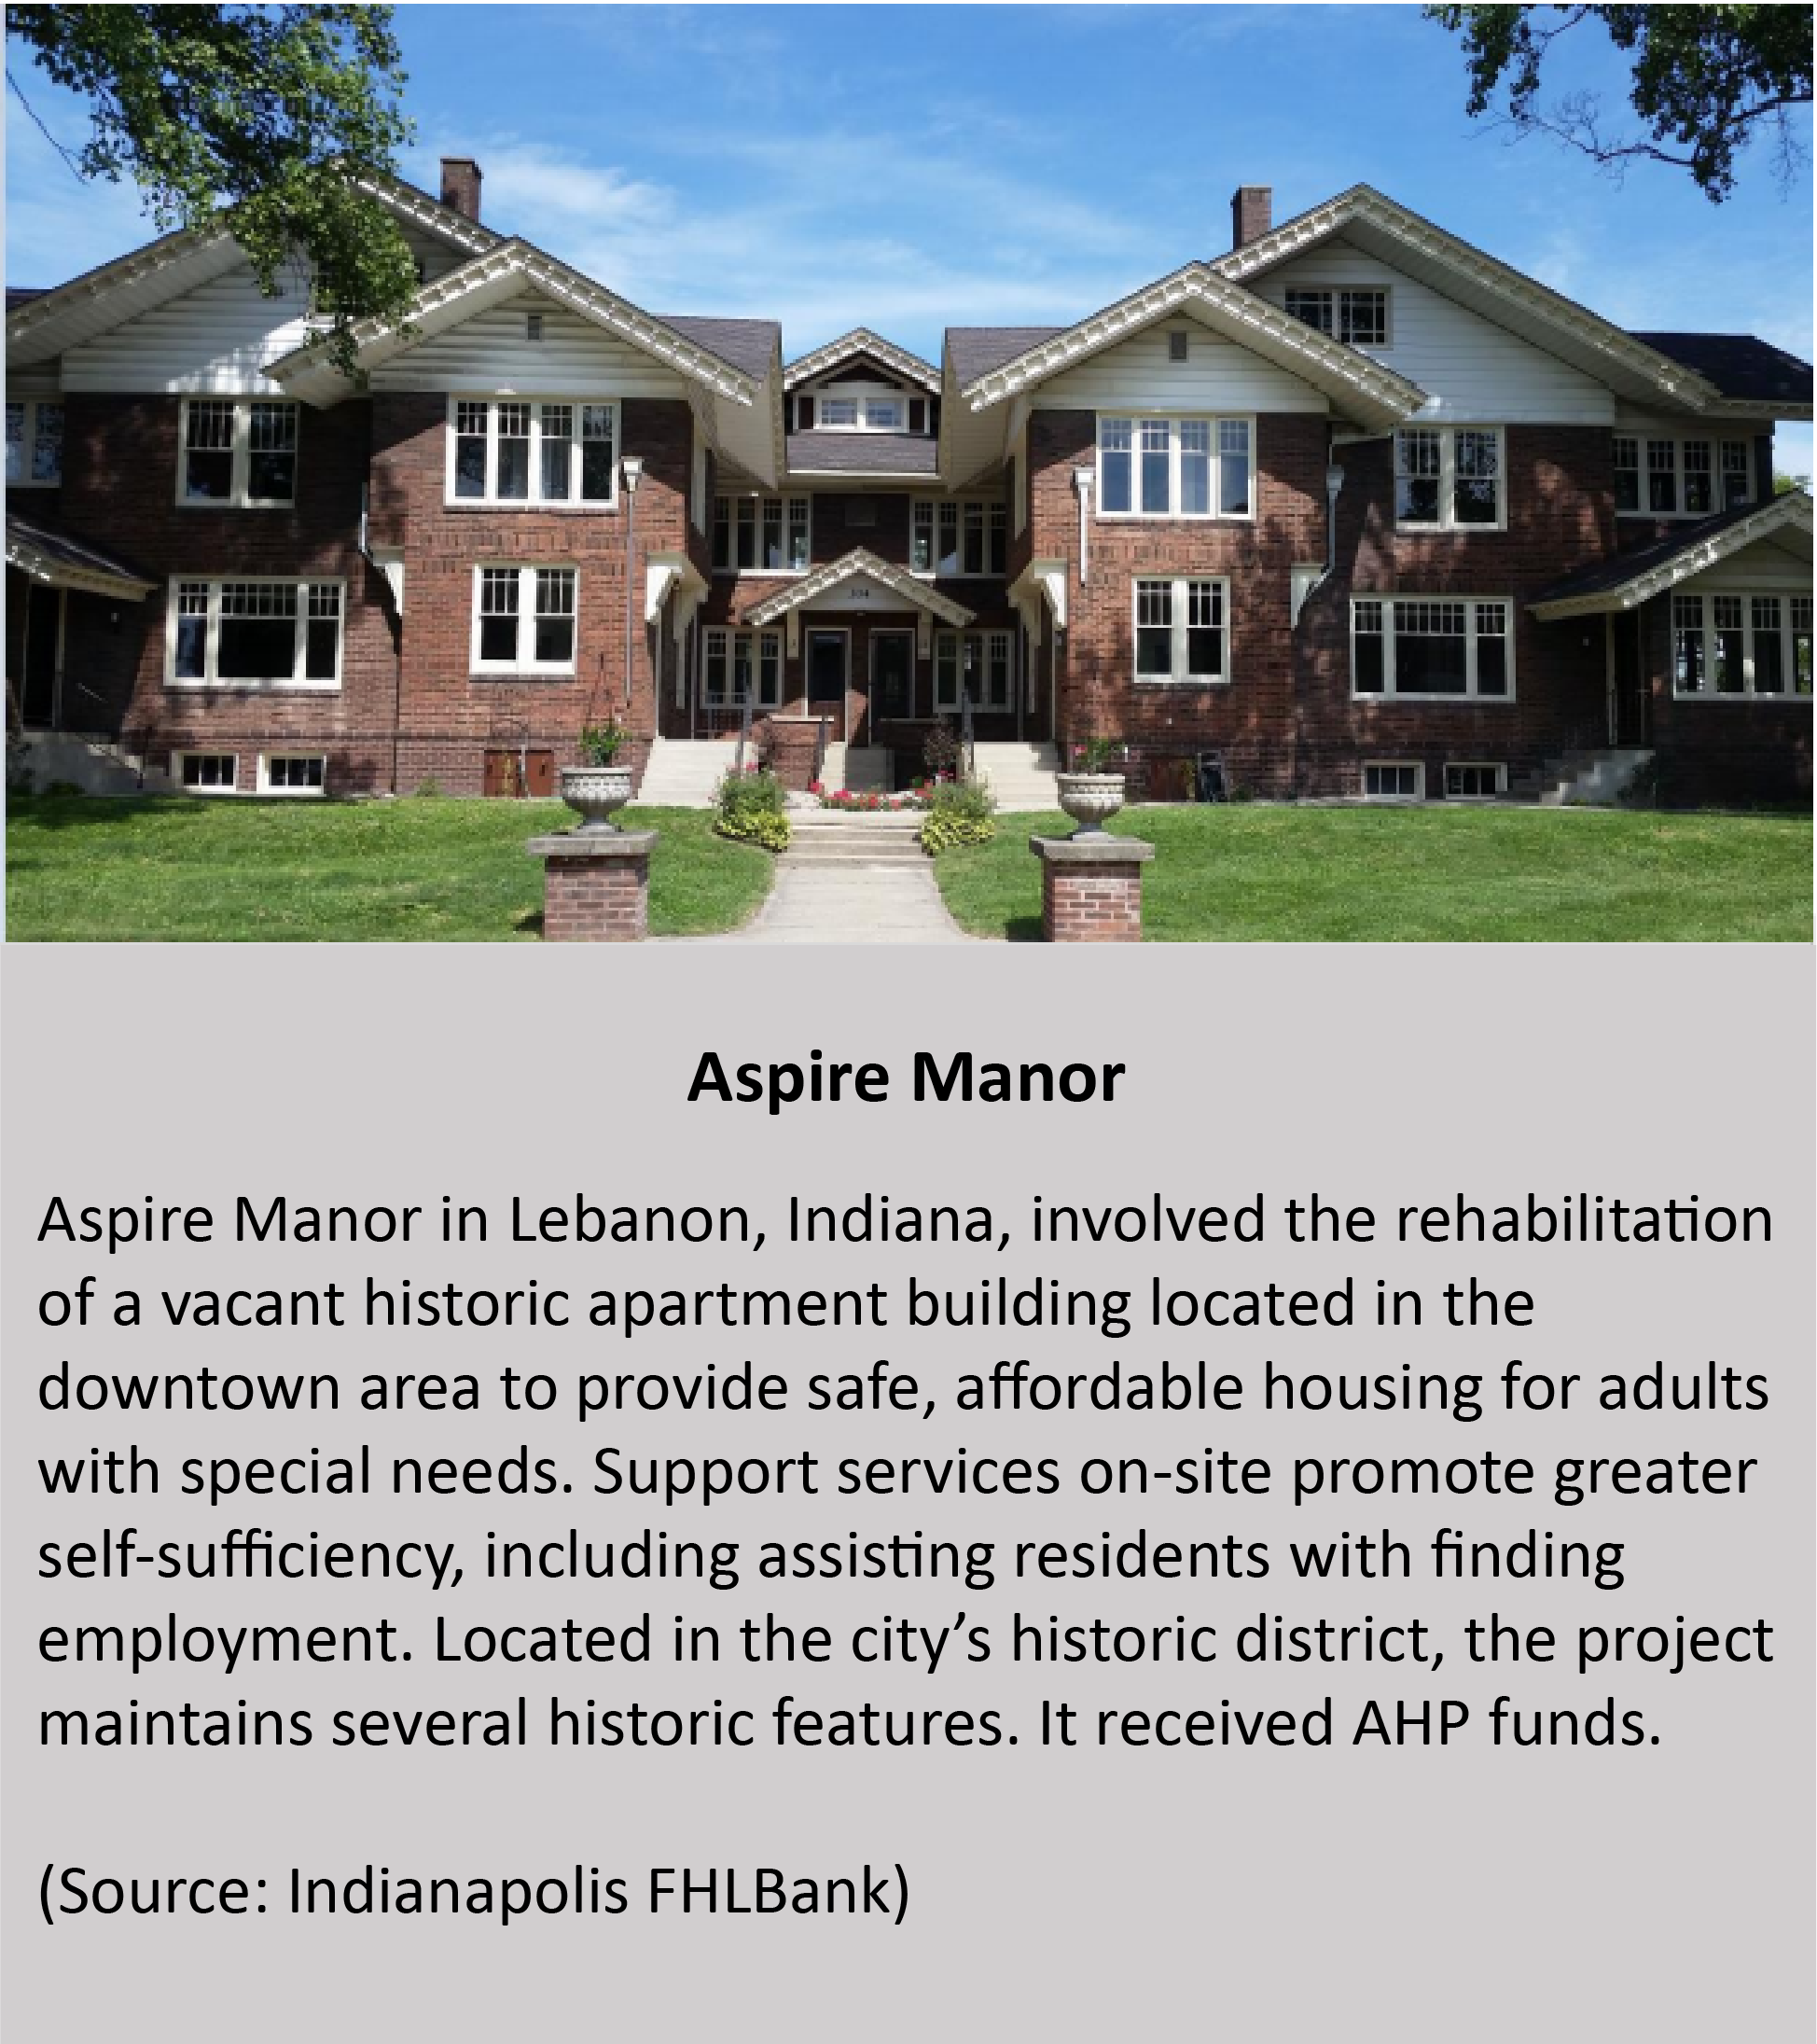 Aspire Manor in Lebanon, Indiana